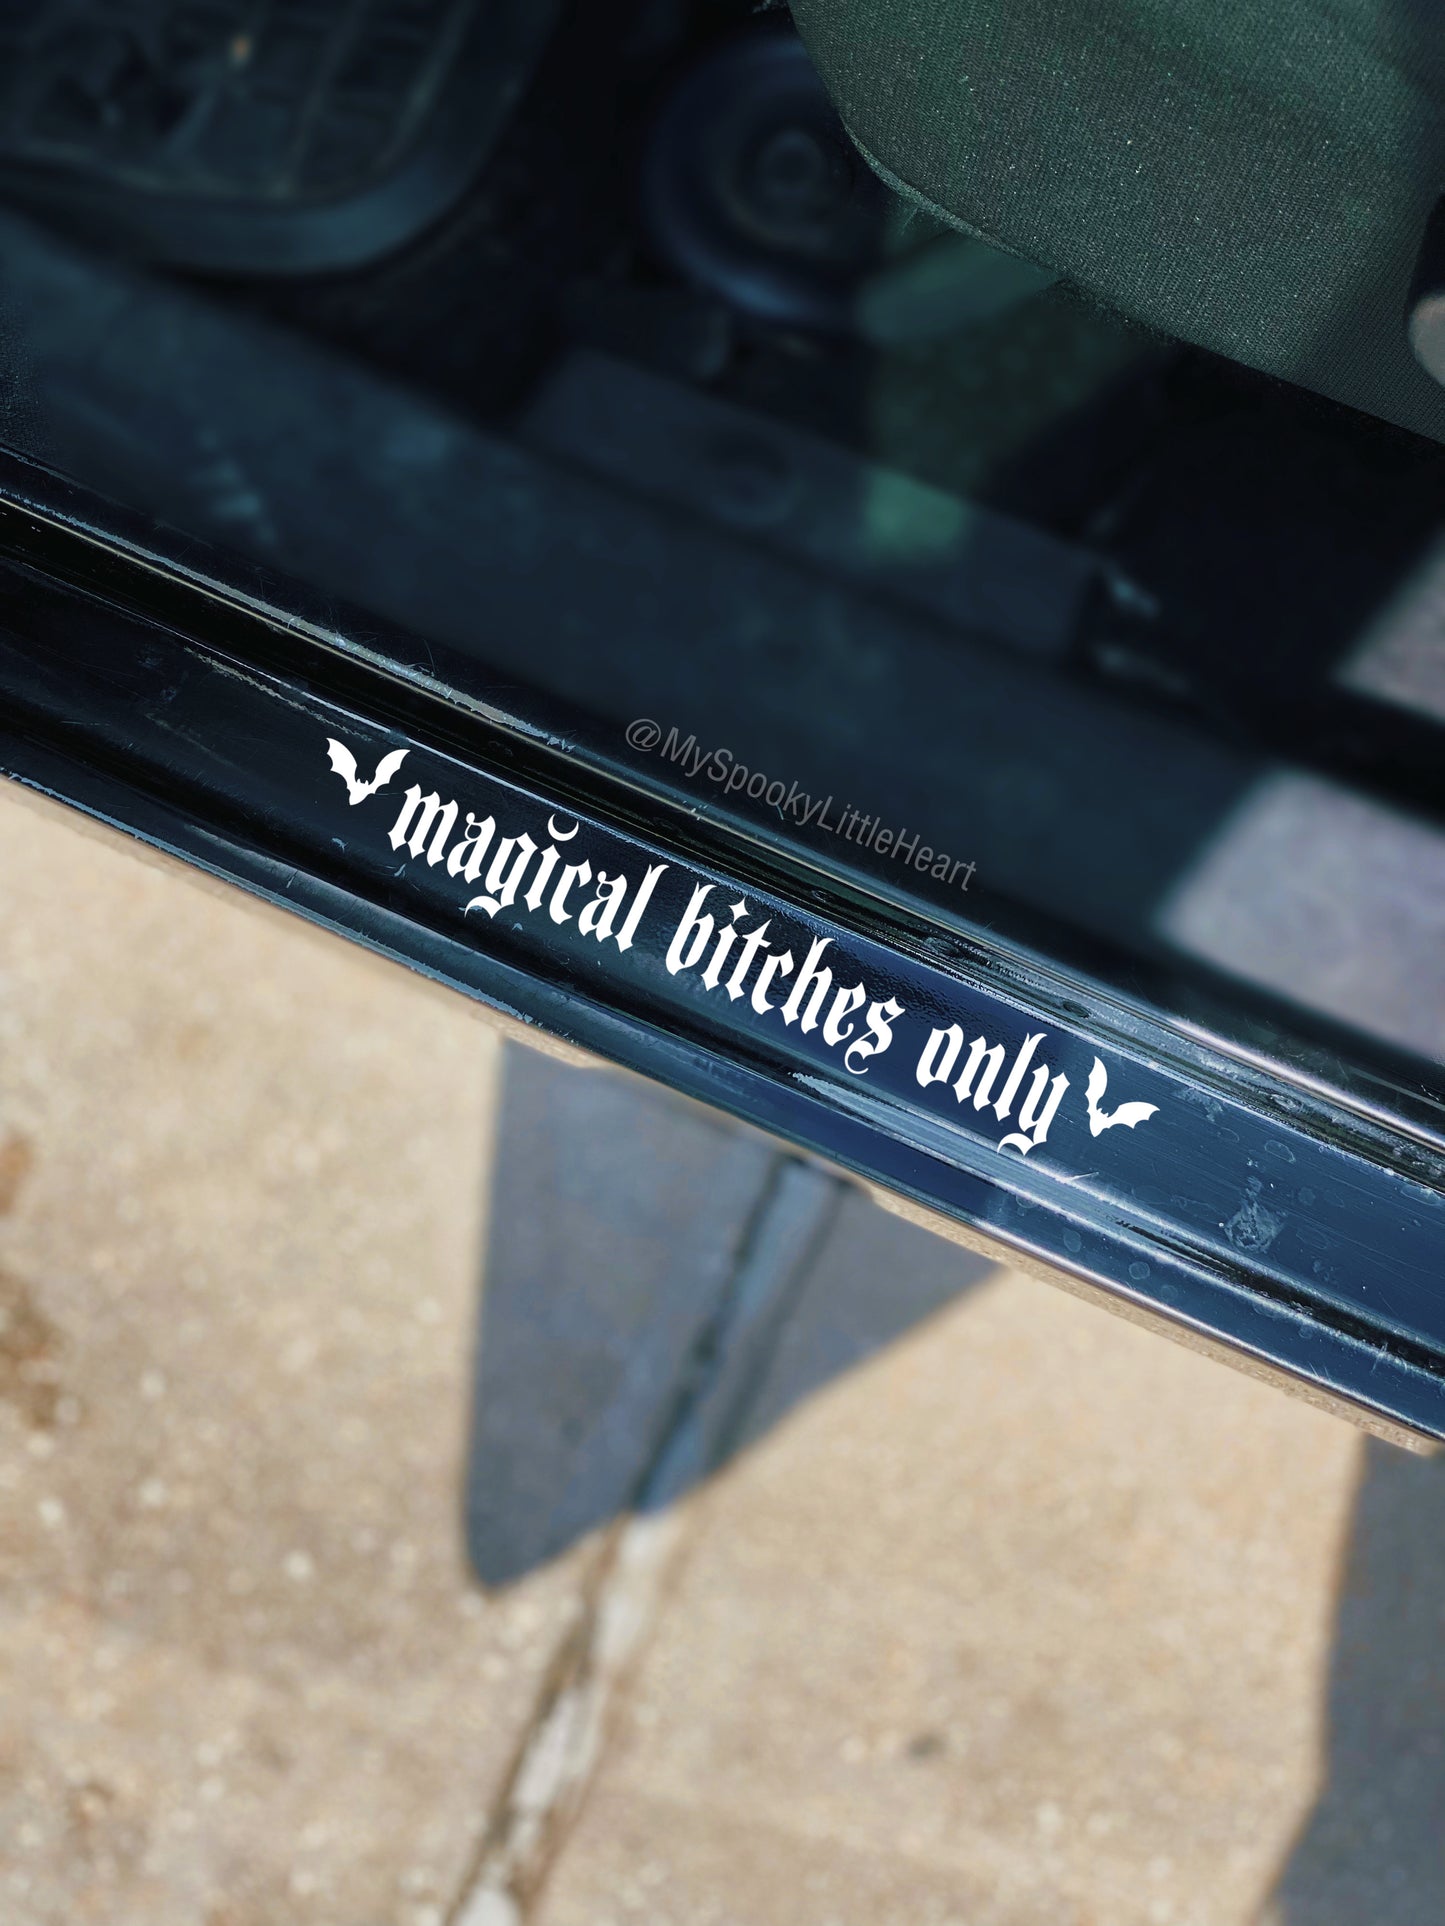 Magical Bitches Only car doorstep vinyl decal